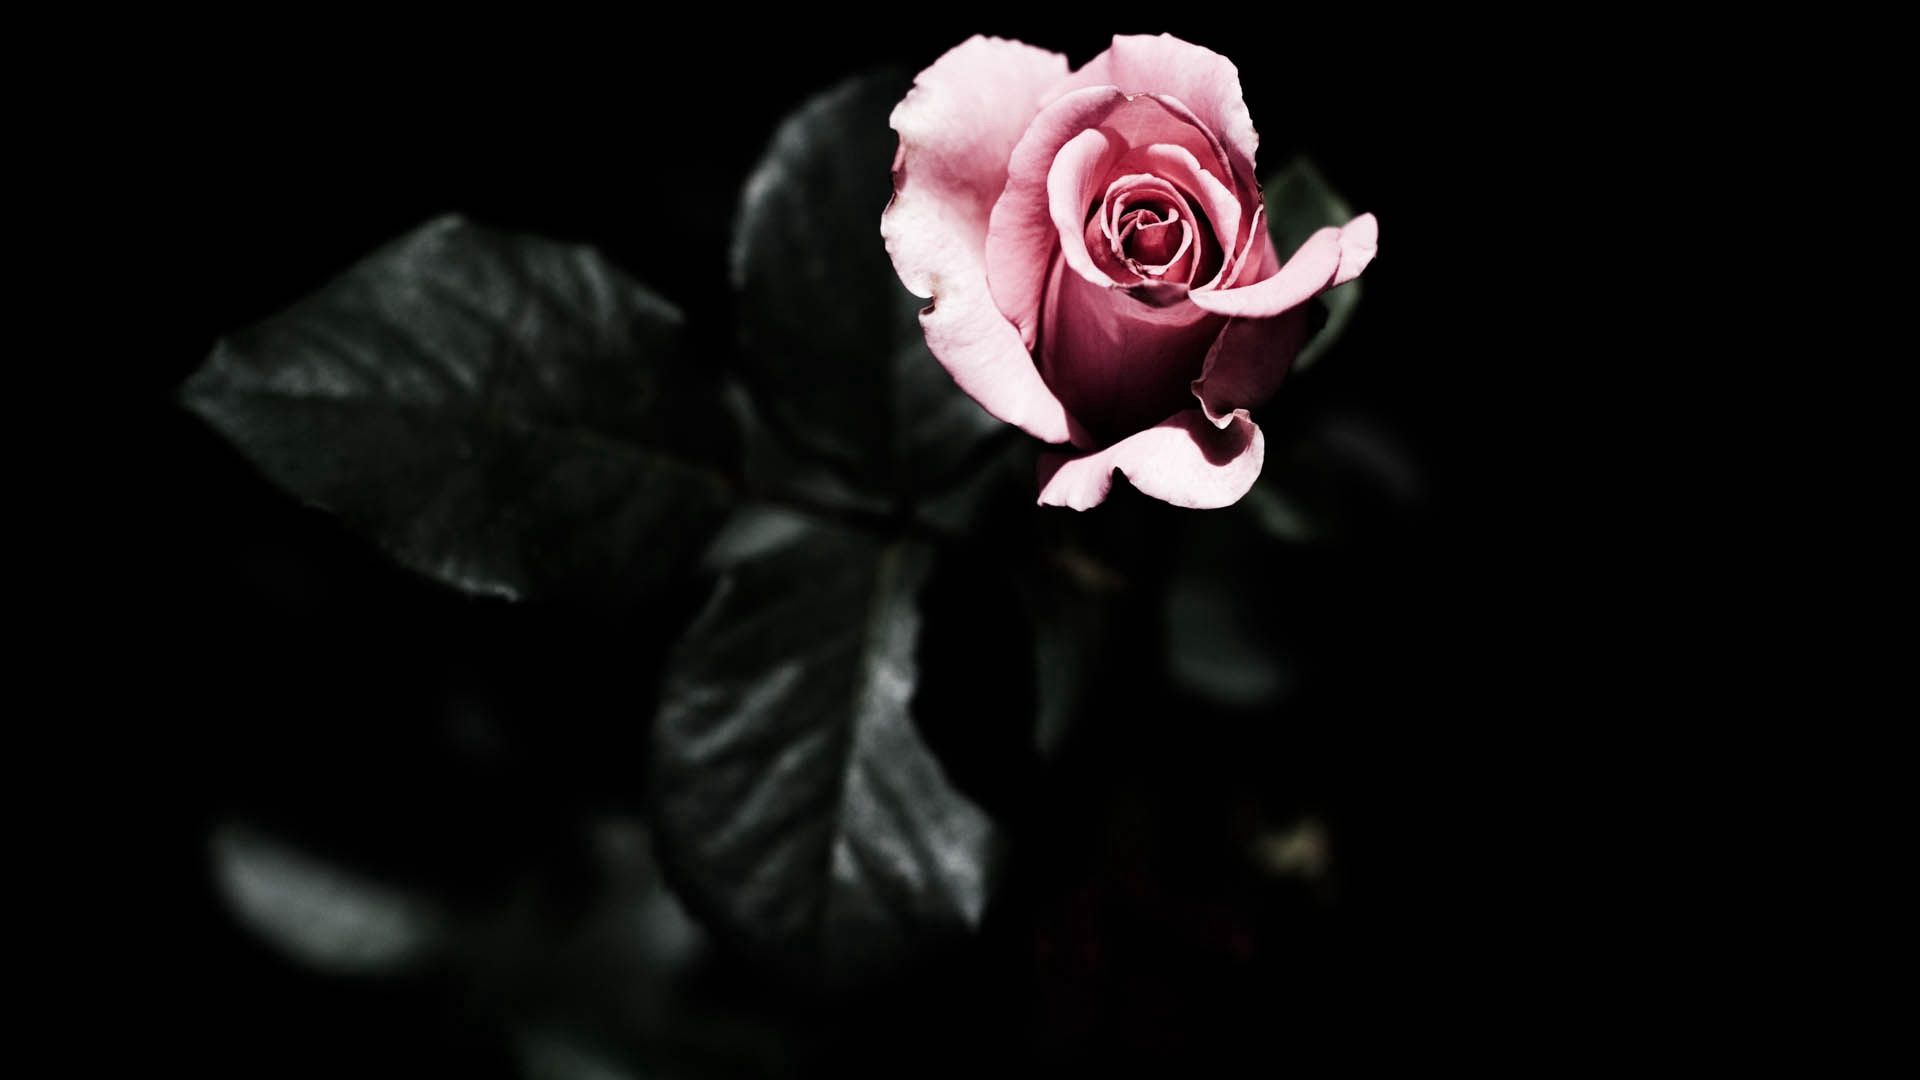 rose, flowers, plant, rose flower, petals